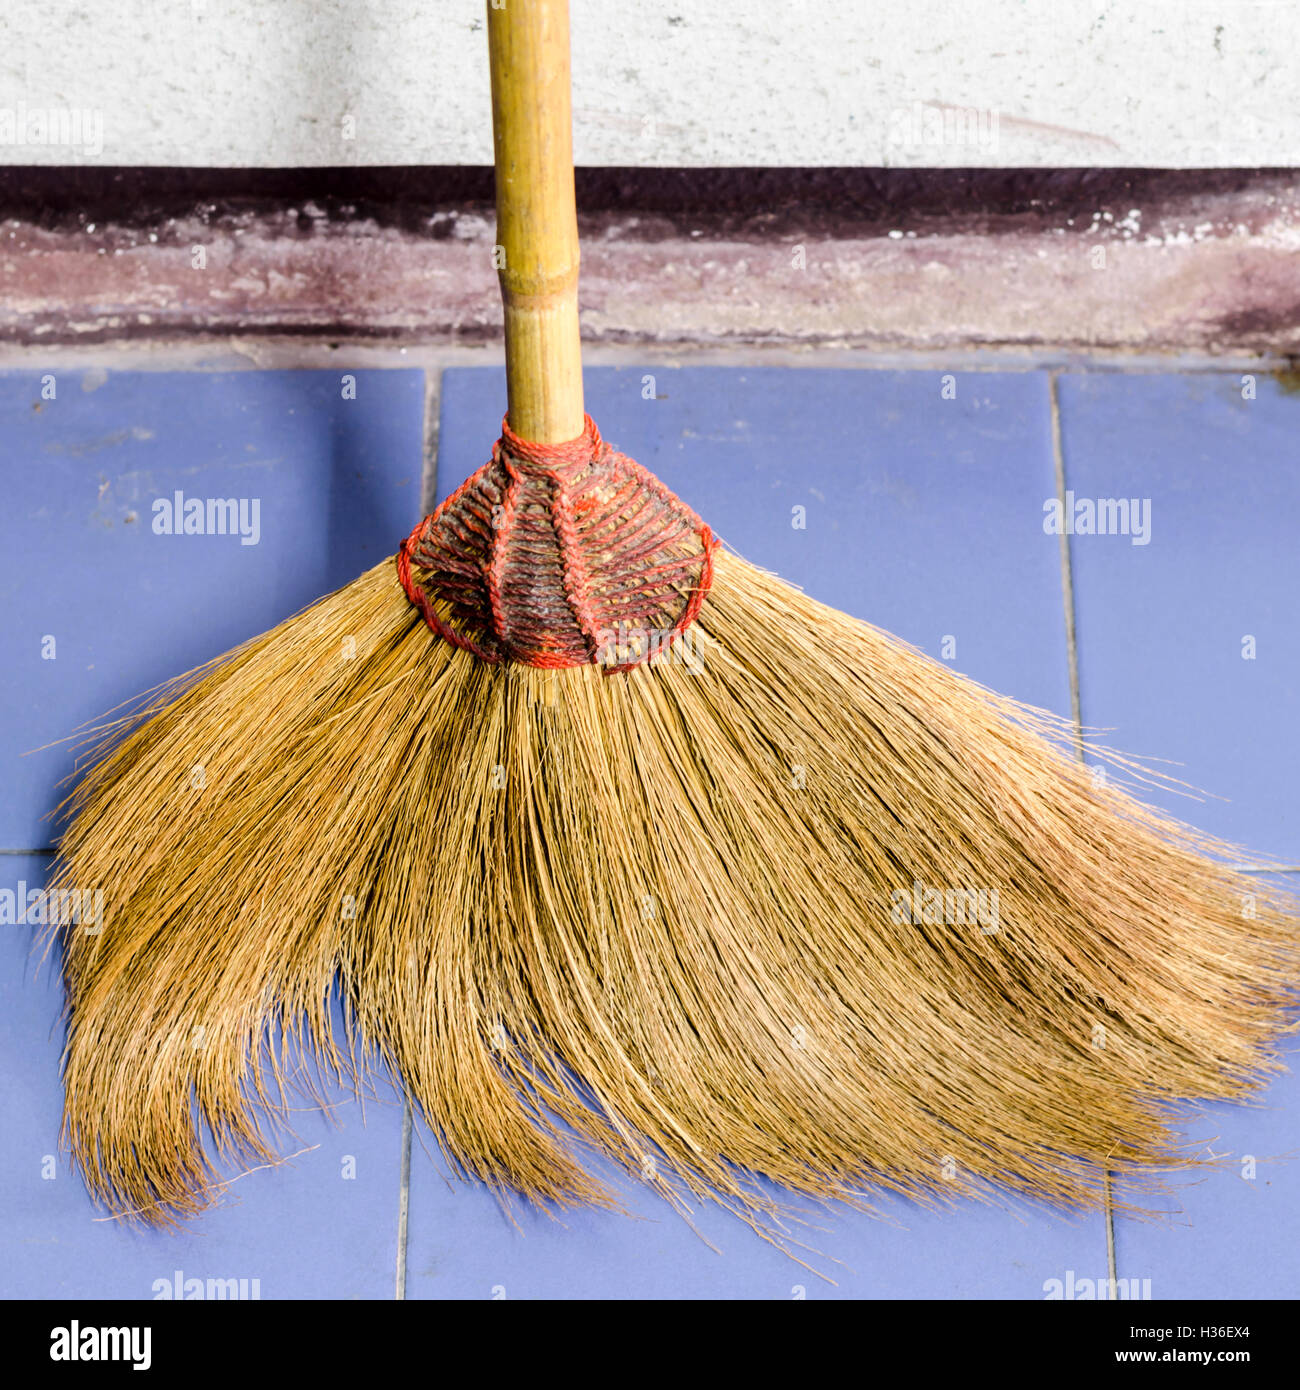 broom in house Stock Photo